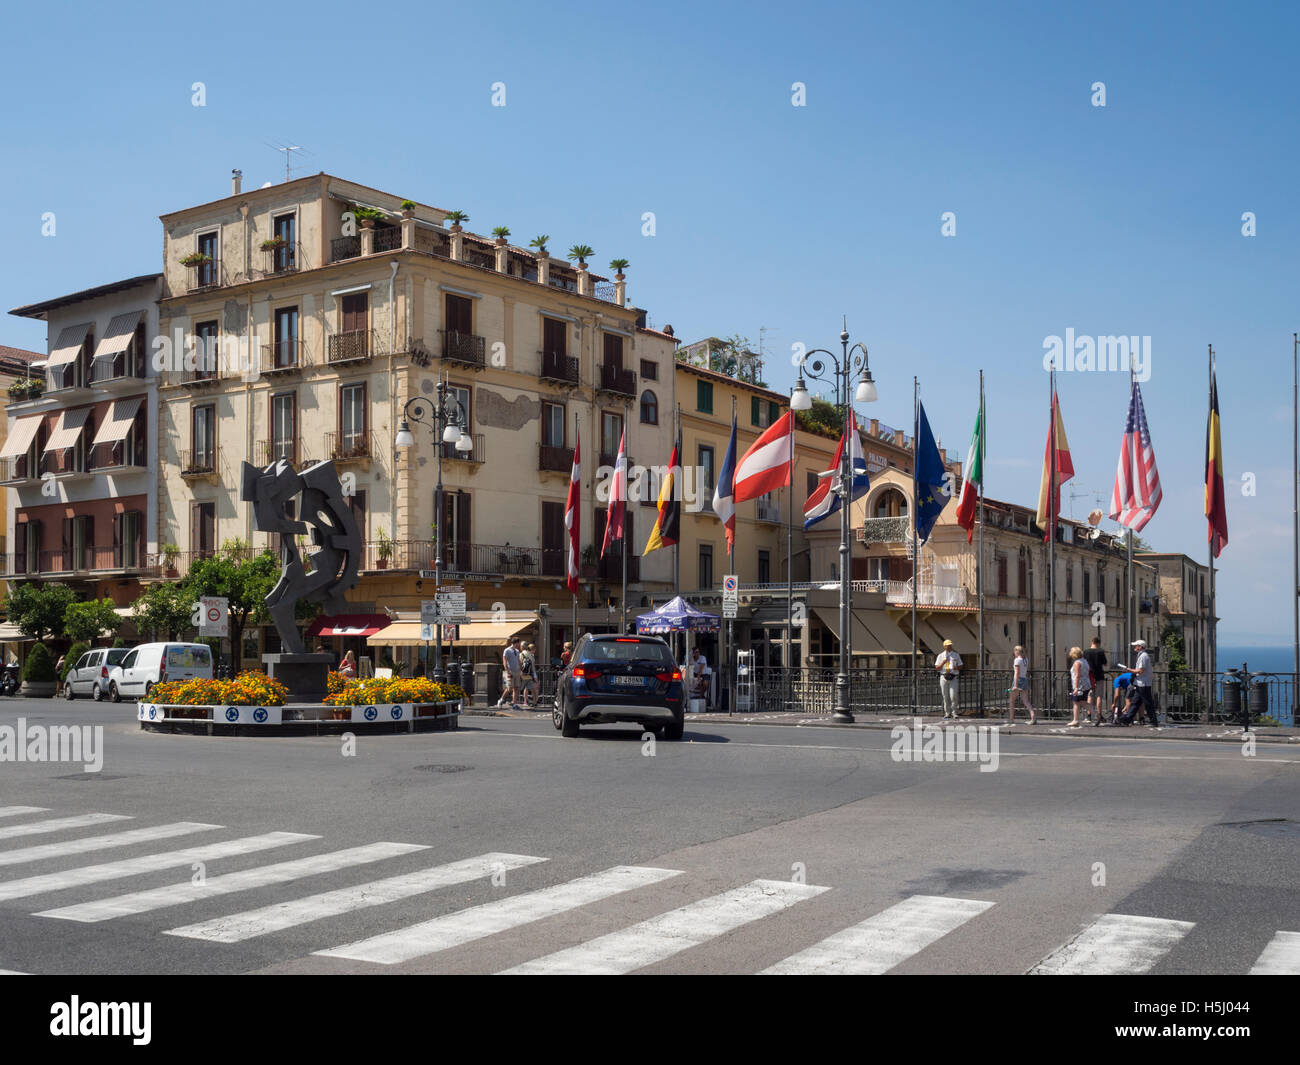 Piazza Tasso, Sorrento, Italy Stock Photo